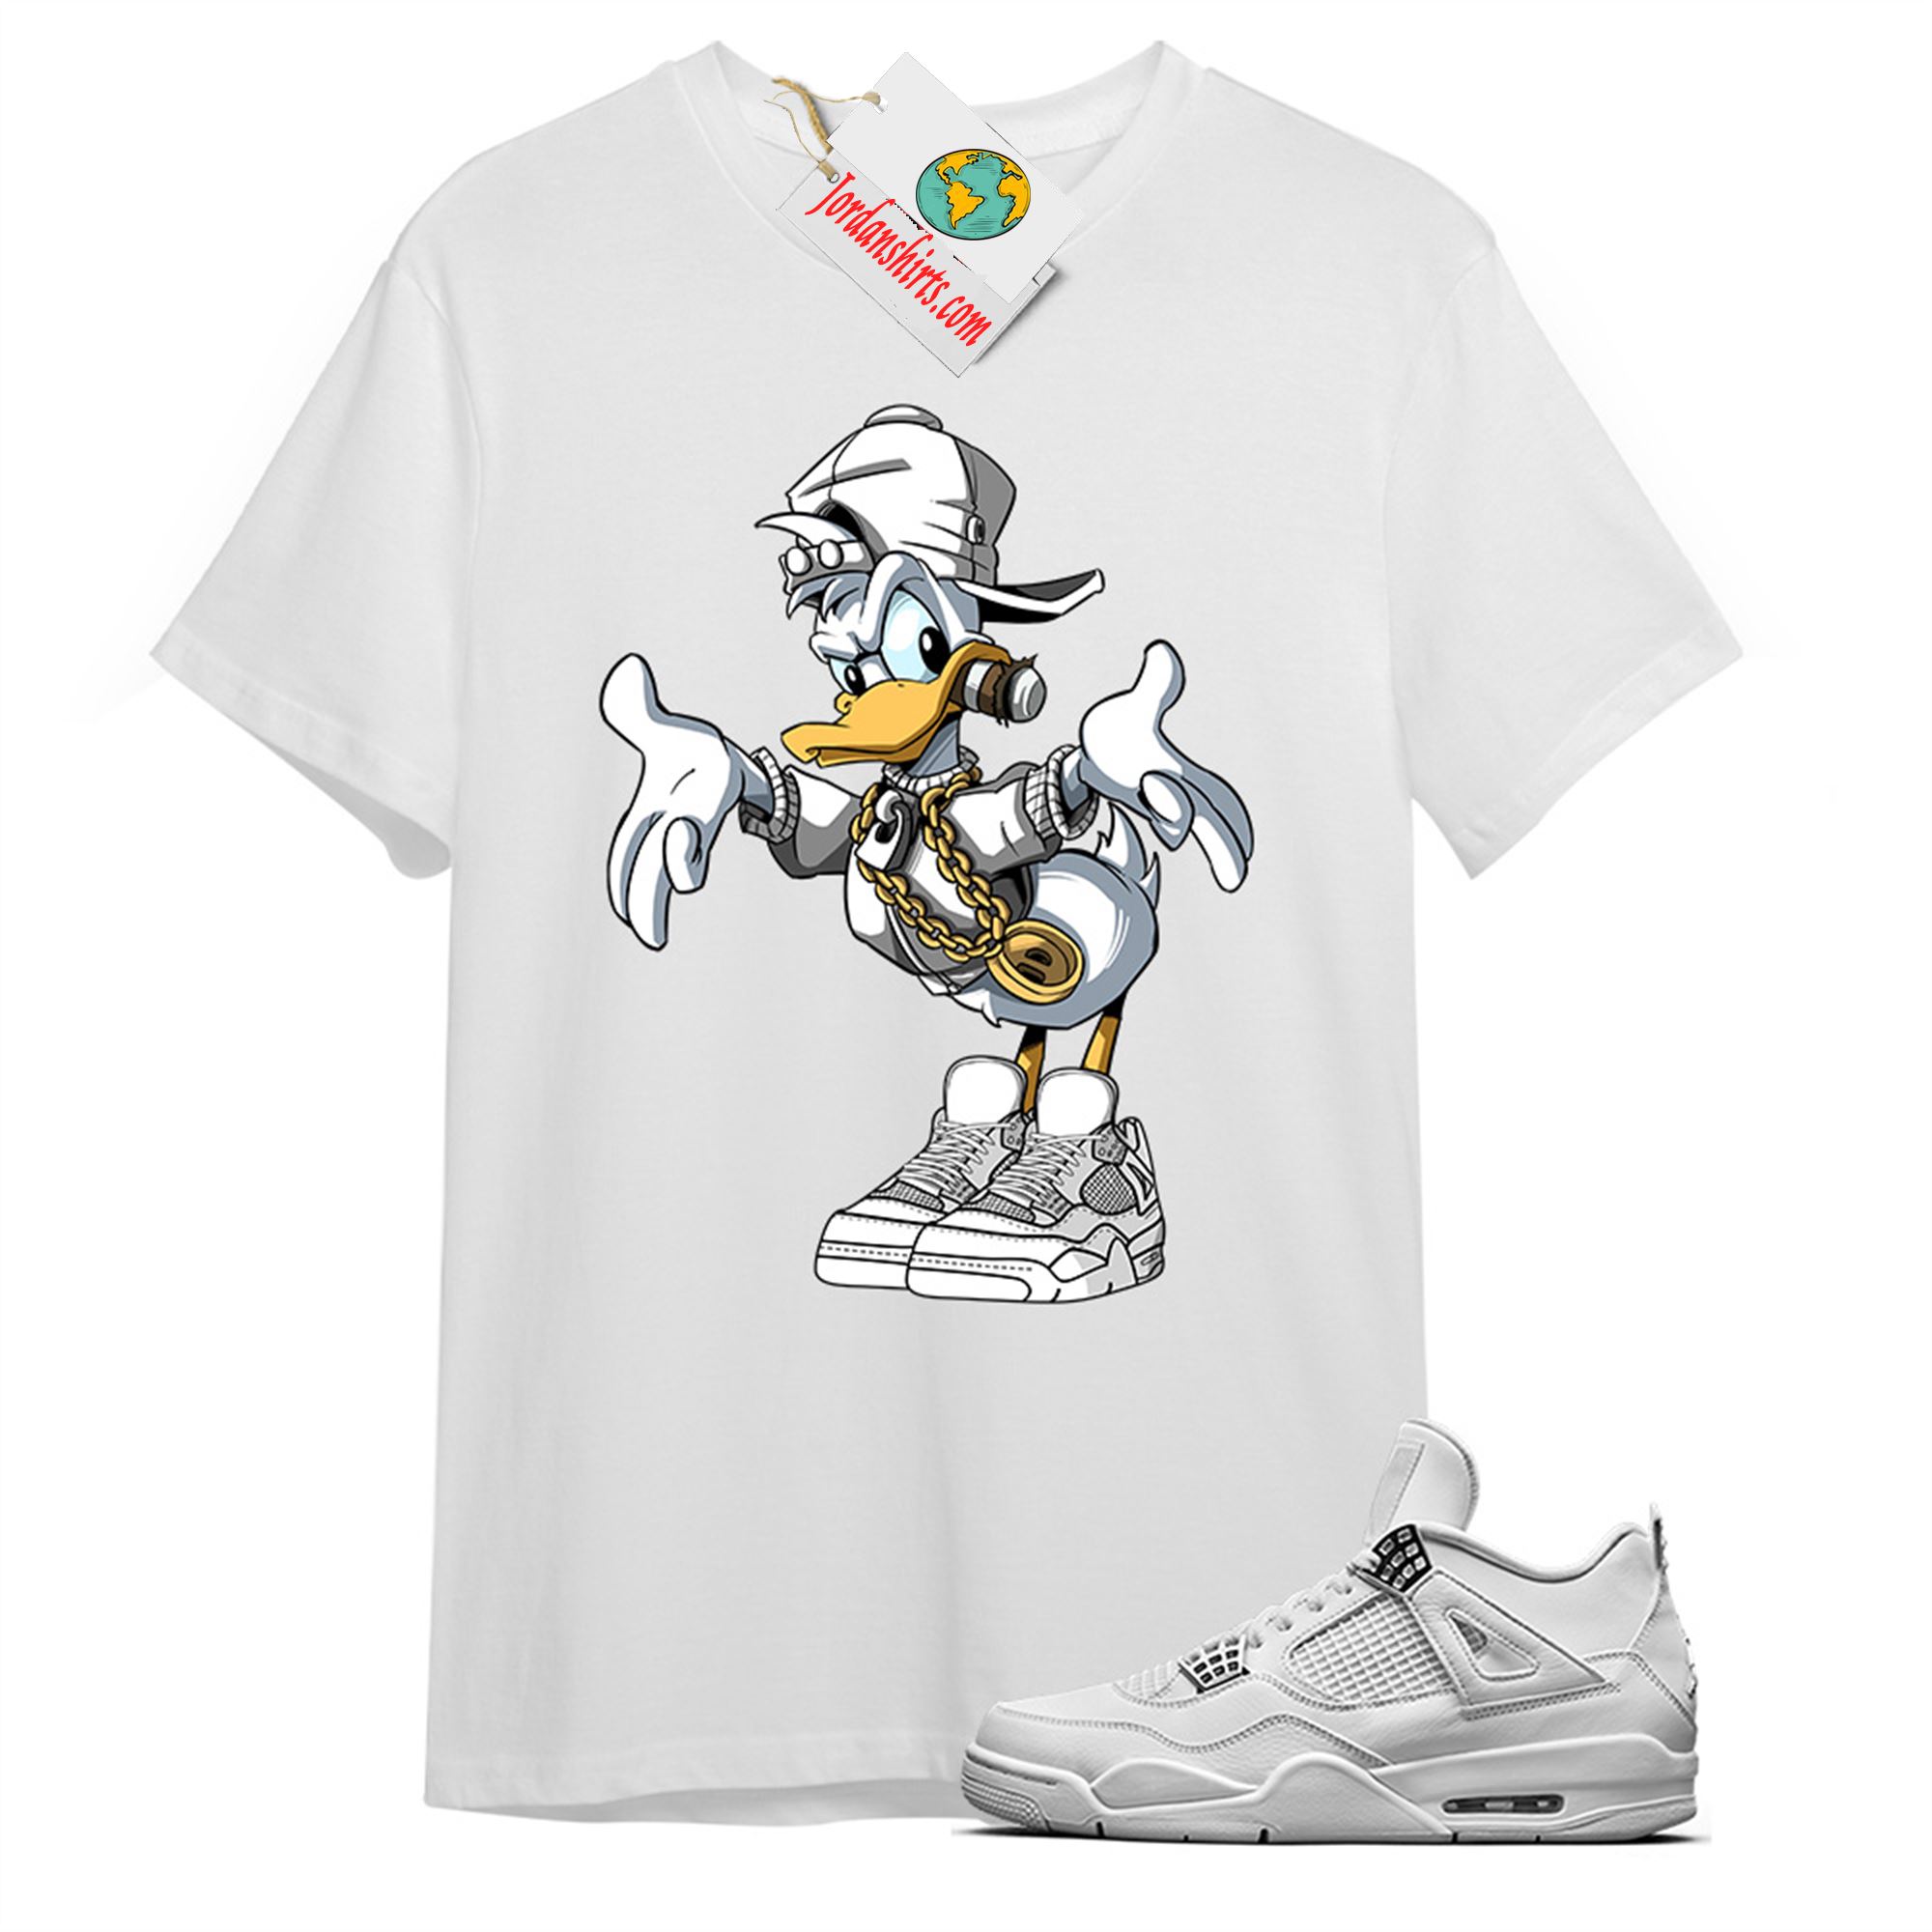 Jordan 4 Shirt, Donald Duck White T-shirt Air Jordan 4 Pure Money 4s Full Size Up To 5xl